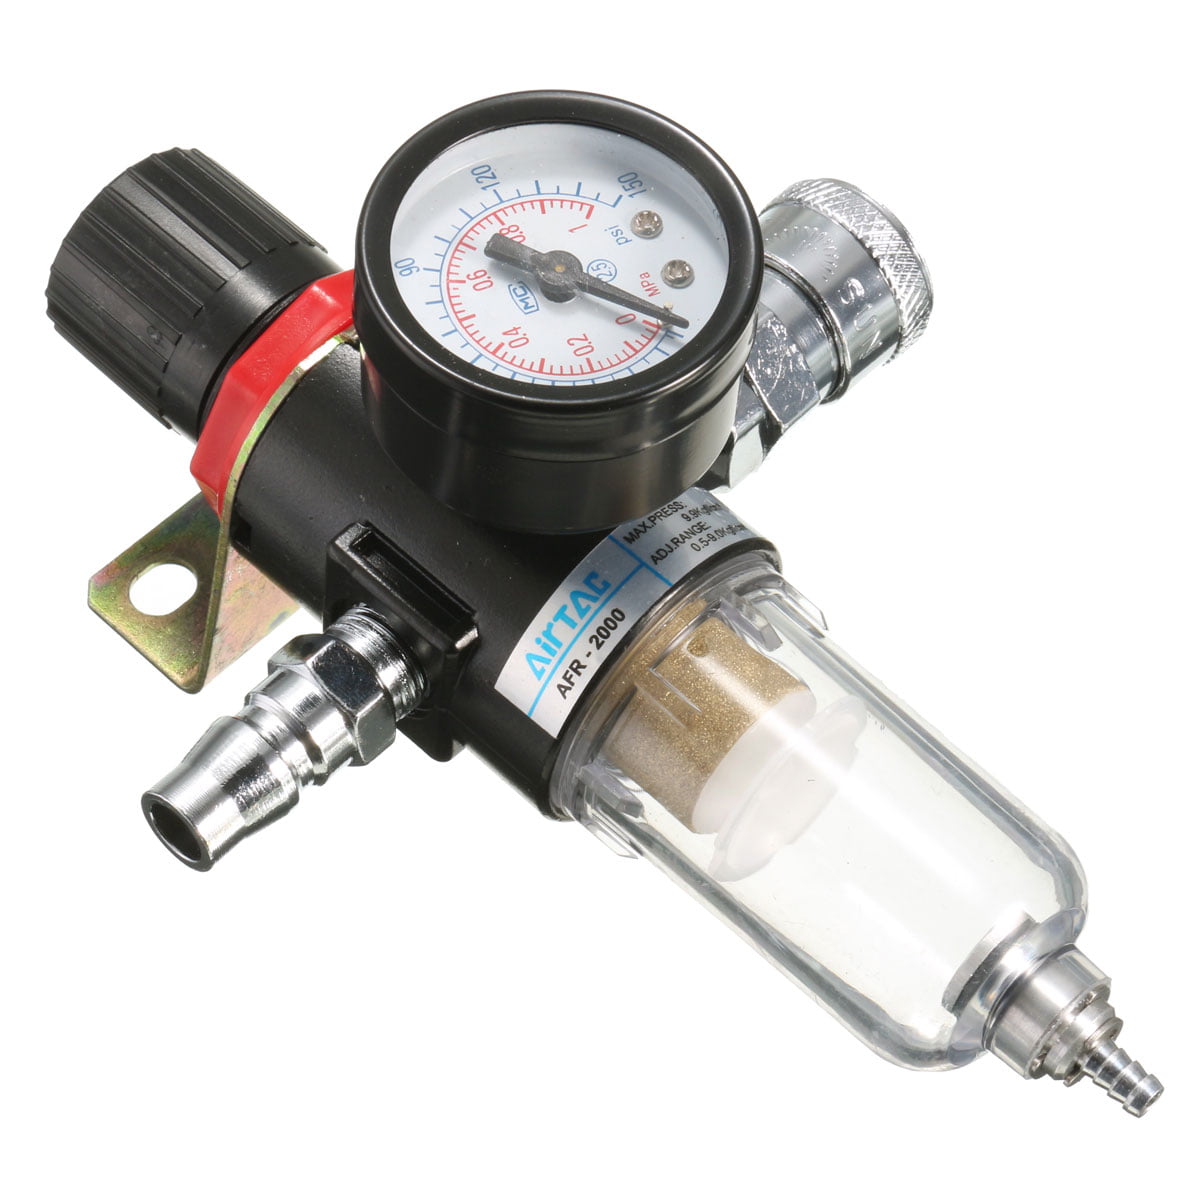 shamjina Air Compressor Moisture Water Trap Filter Regulator Separator with Mount 